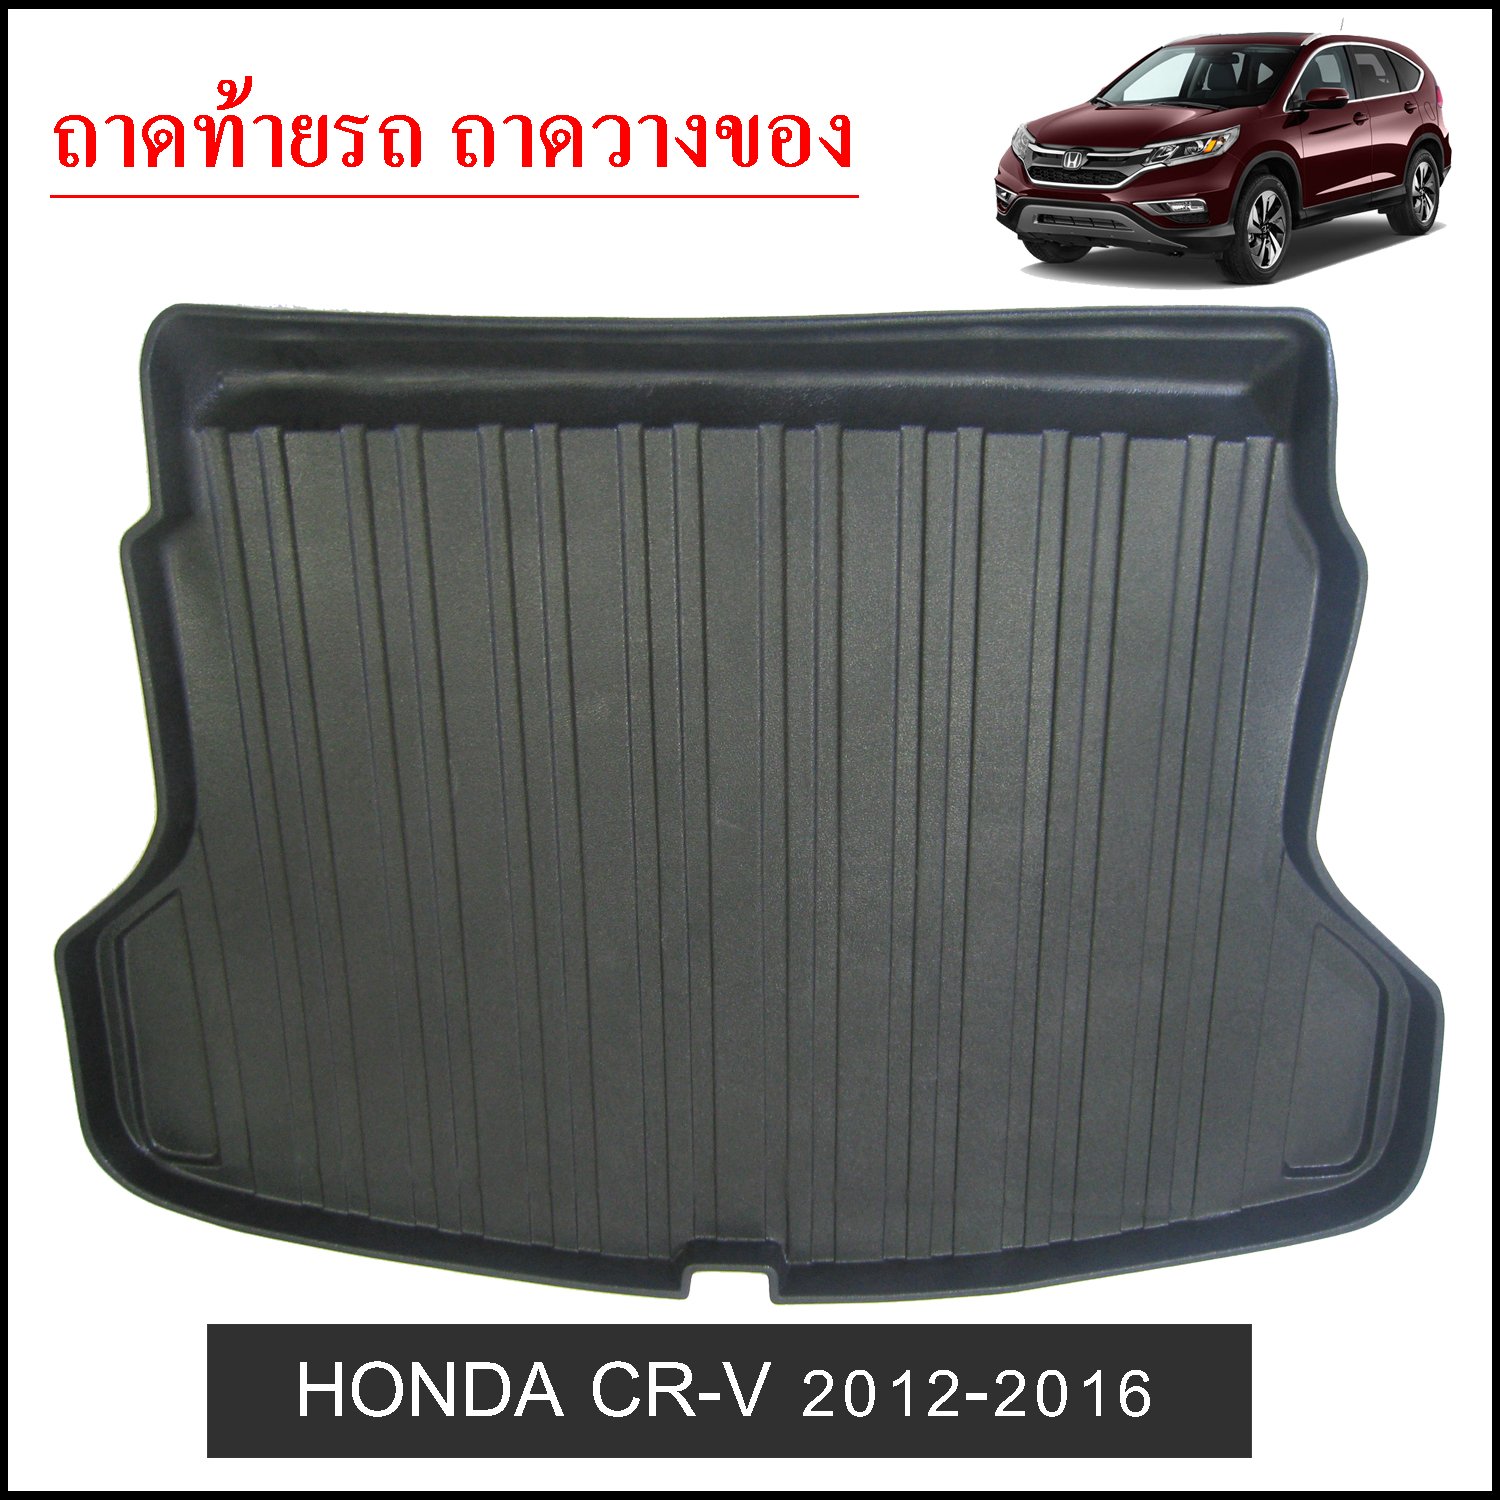 Honda CRV 2012-2016